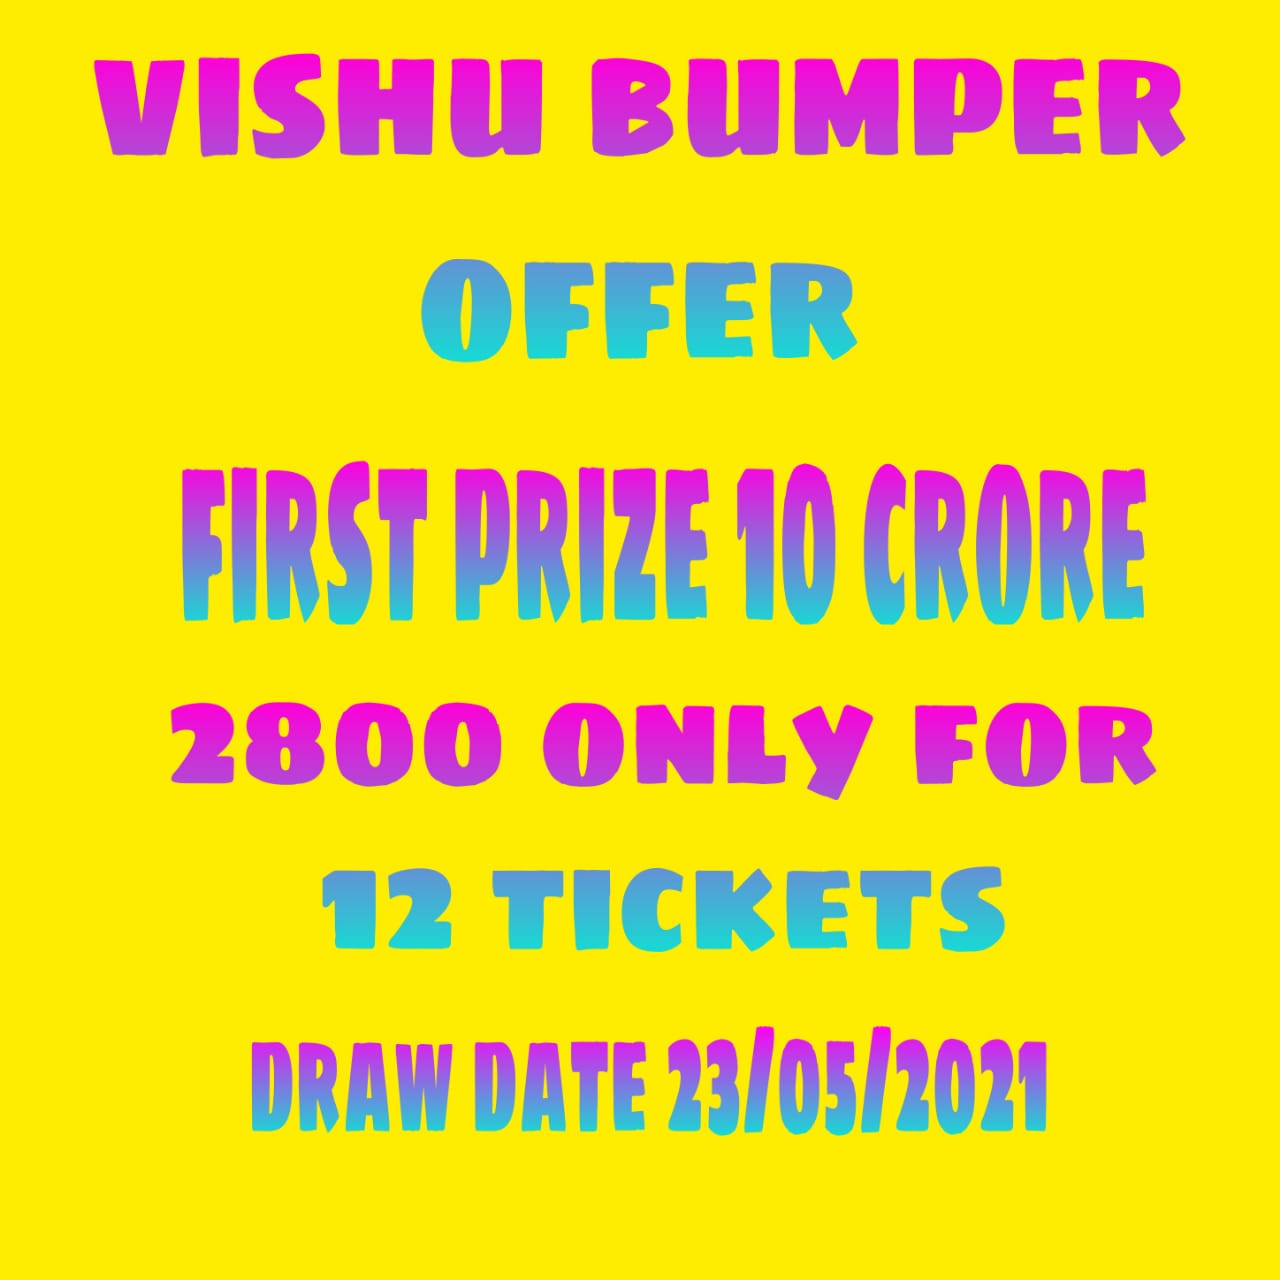 Kerala Vishu Bumper Lottery Online